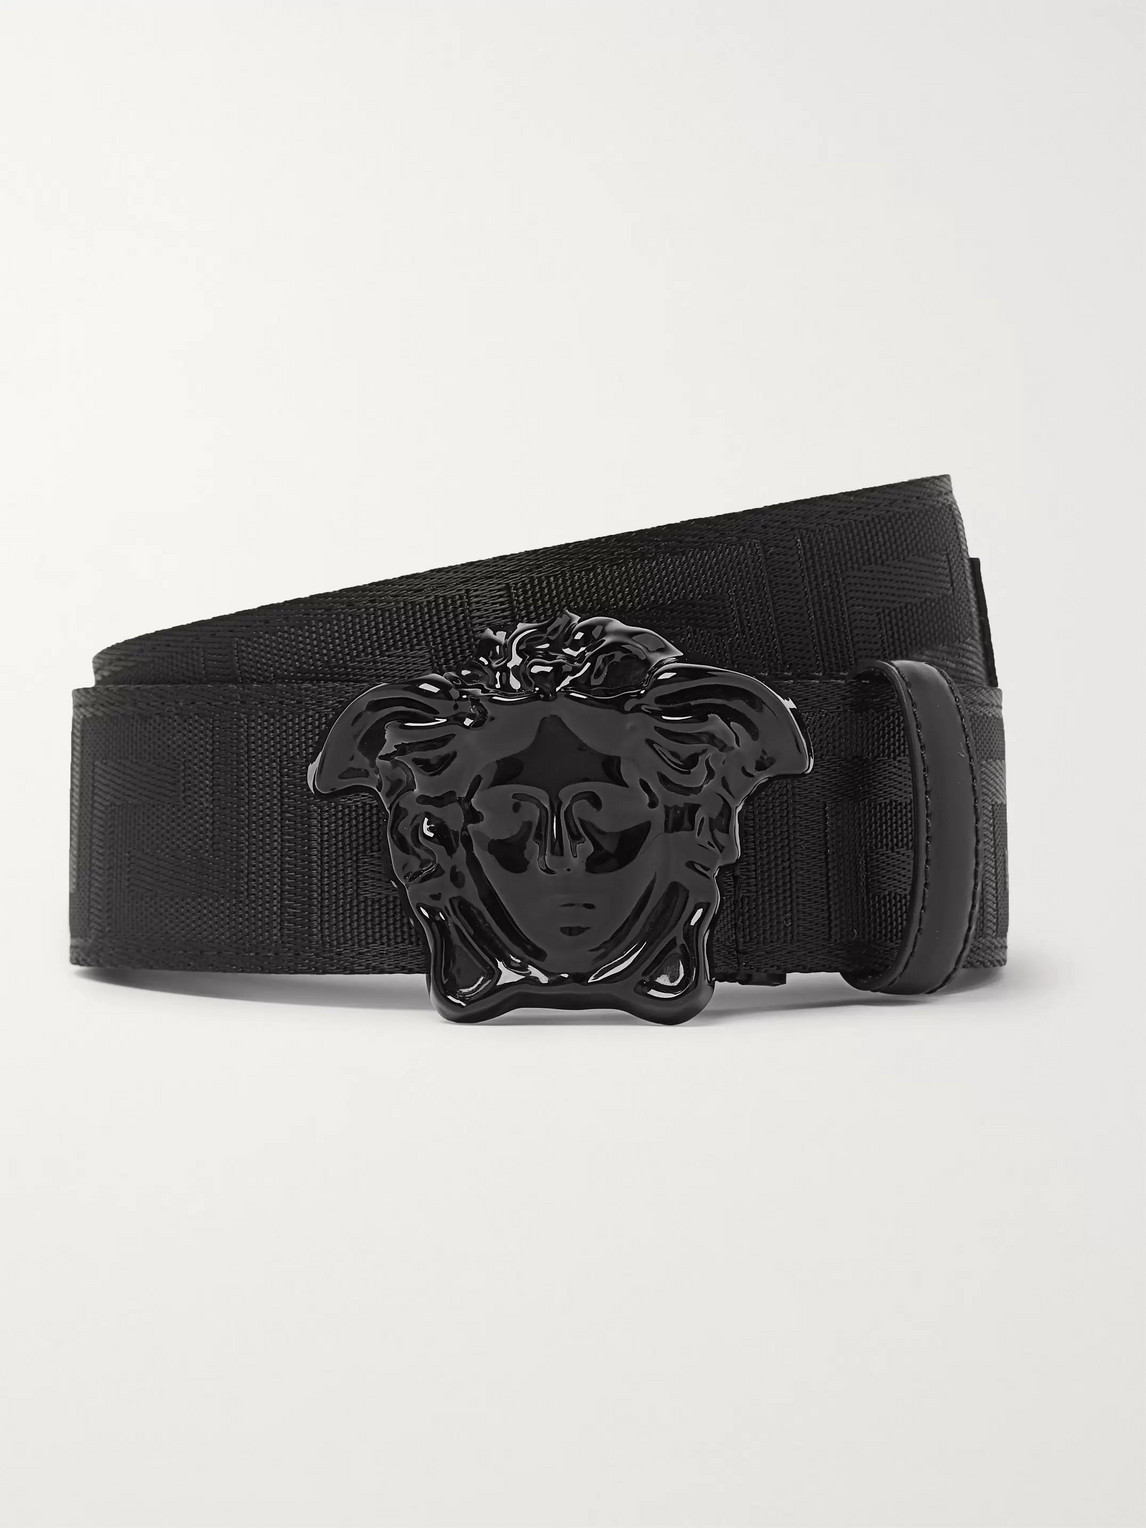 all black versace belt